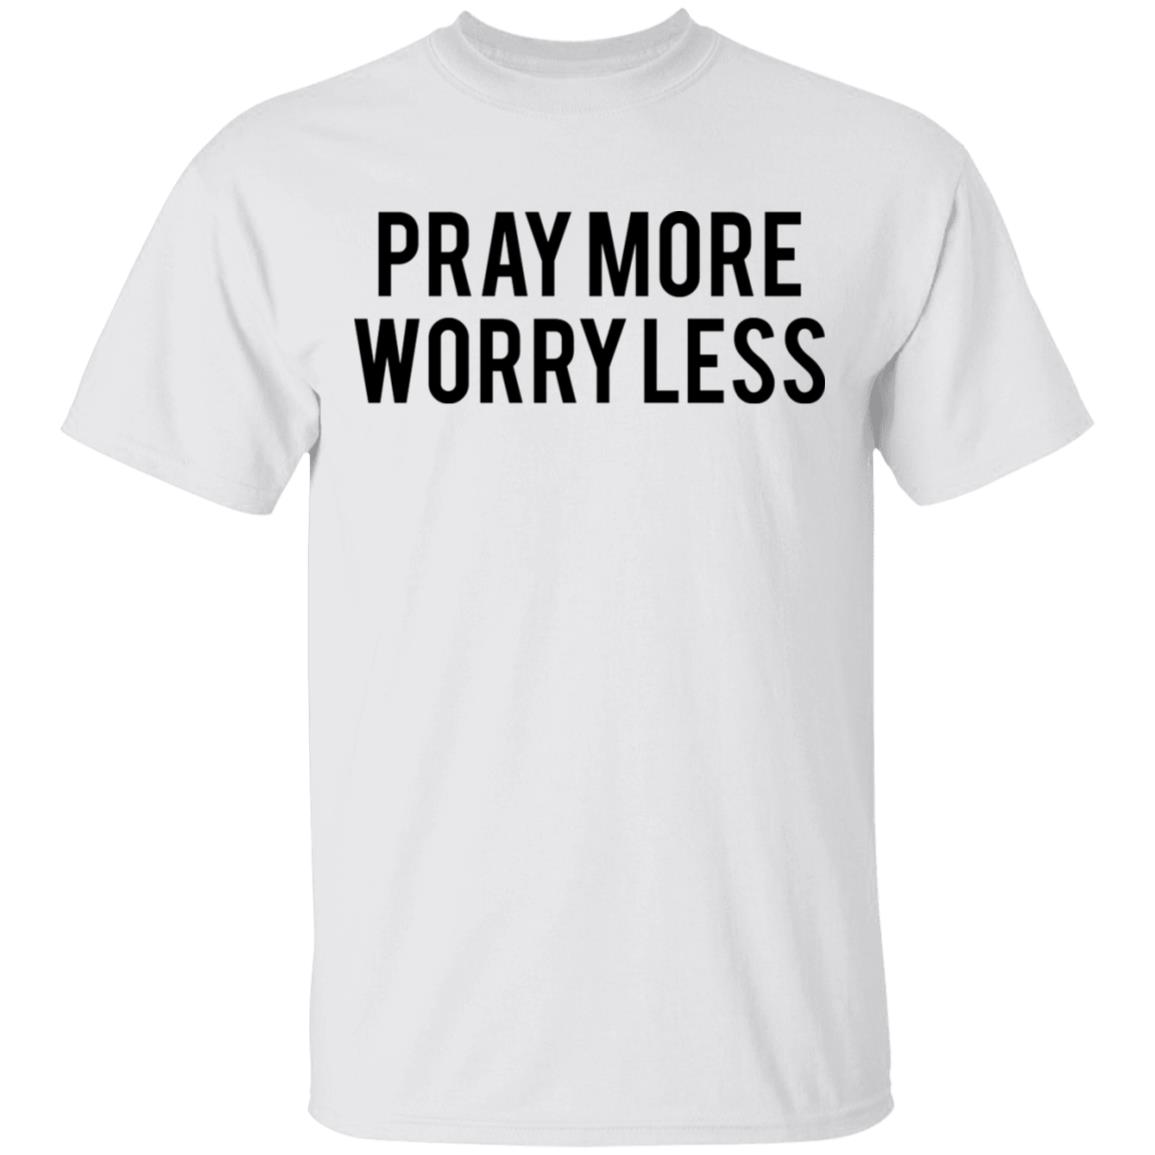 Pray more worry less shirt, hoodie, long sleeve